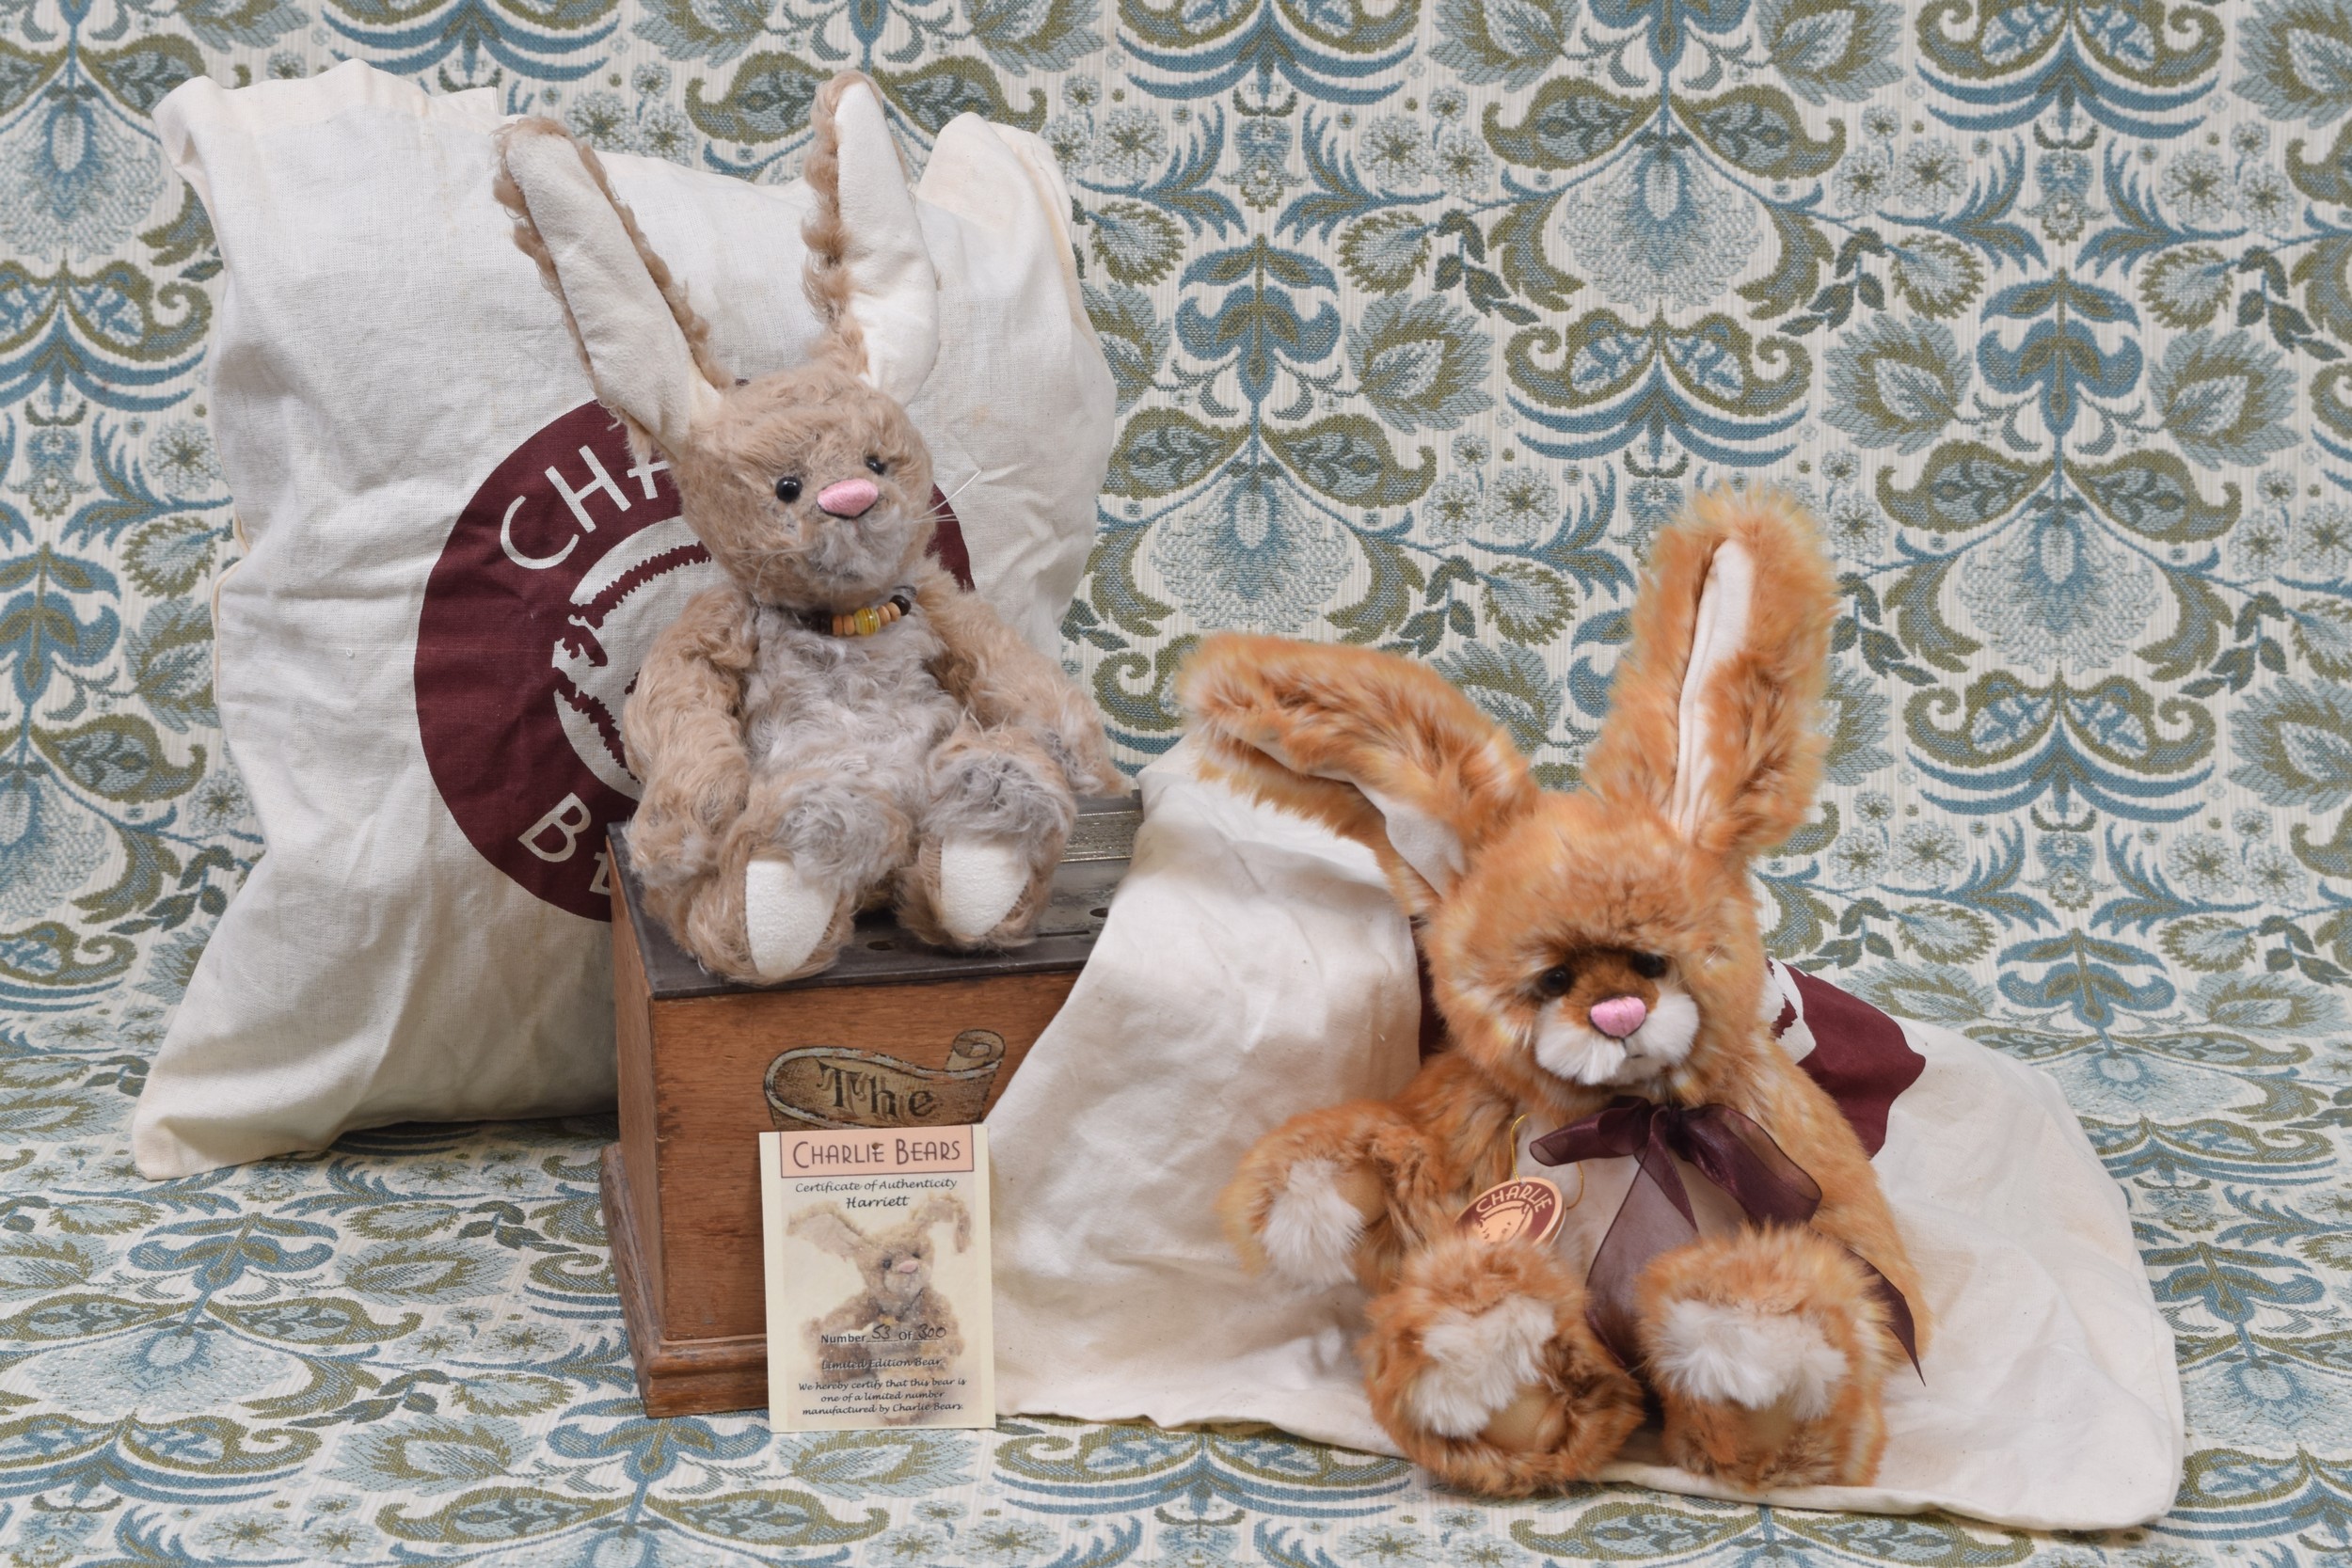 Charlie Bears CB073405 Harriett Rabbit, 30cm high with cardboard tags and Charlie Bears tote bag;